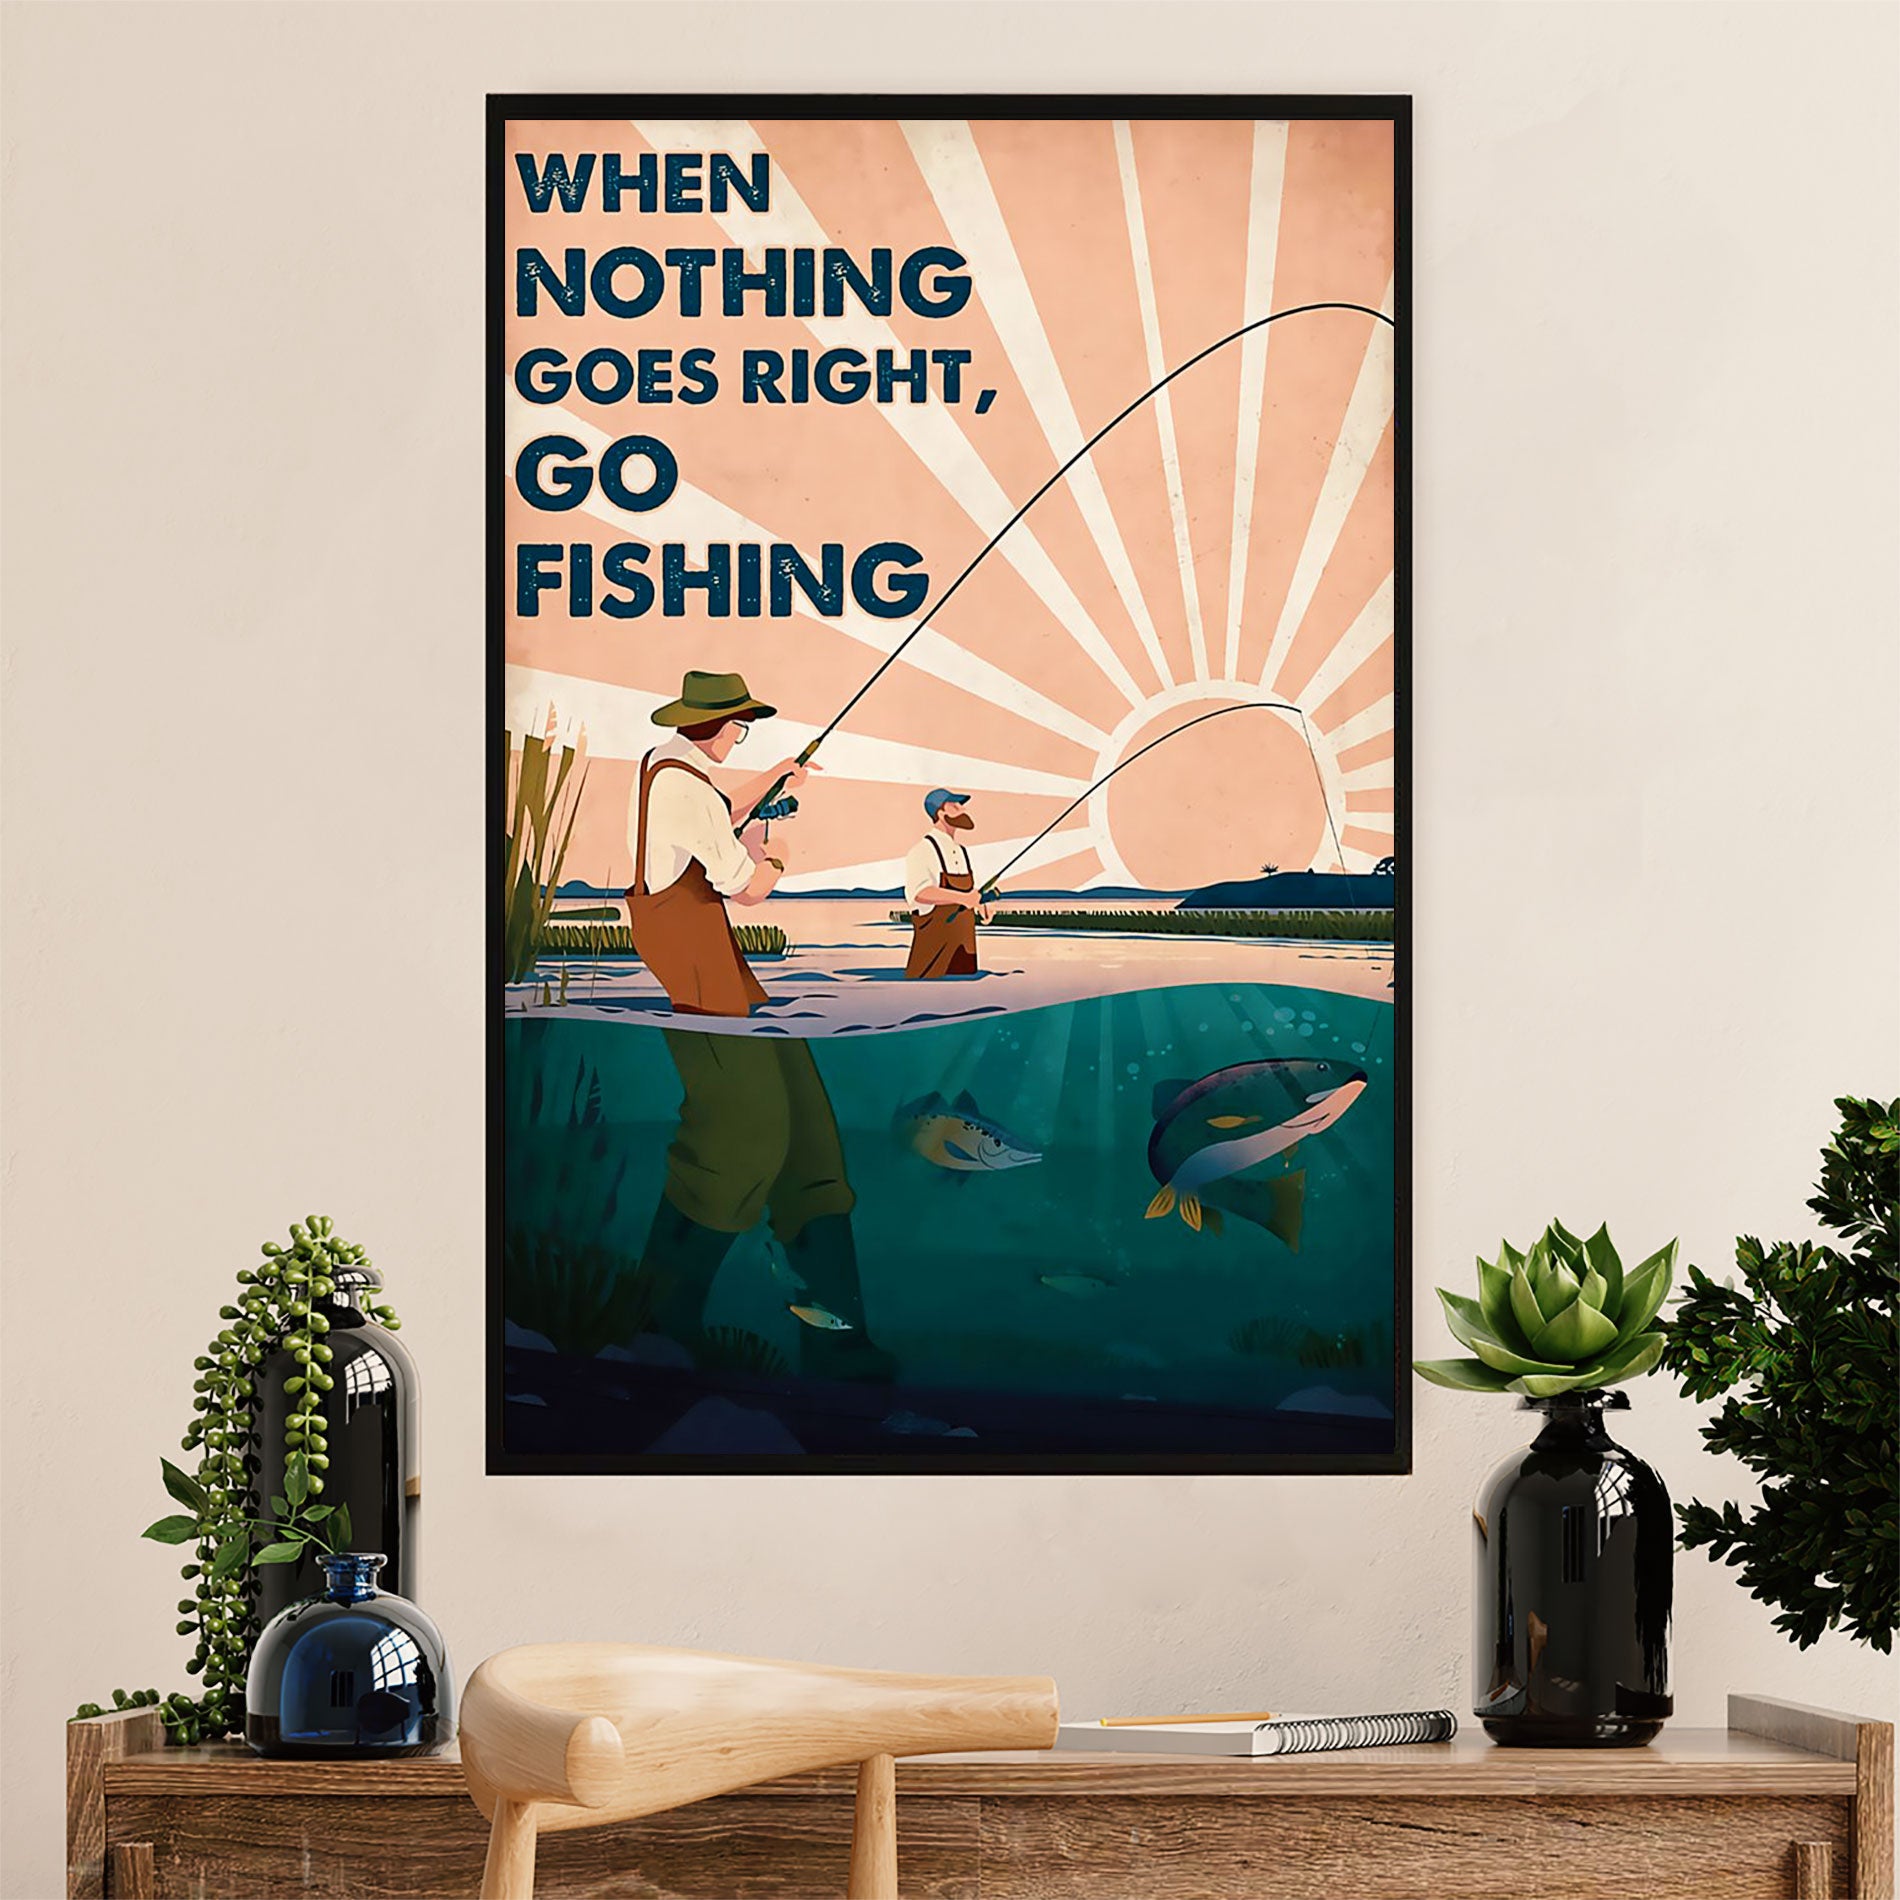 Fishing Poster Room Wall Art Prints, Men Go Fishing